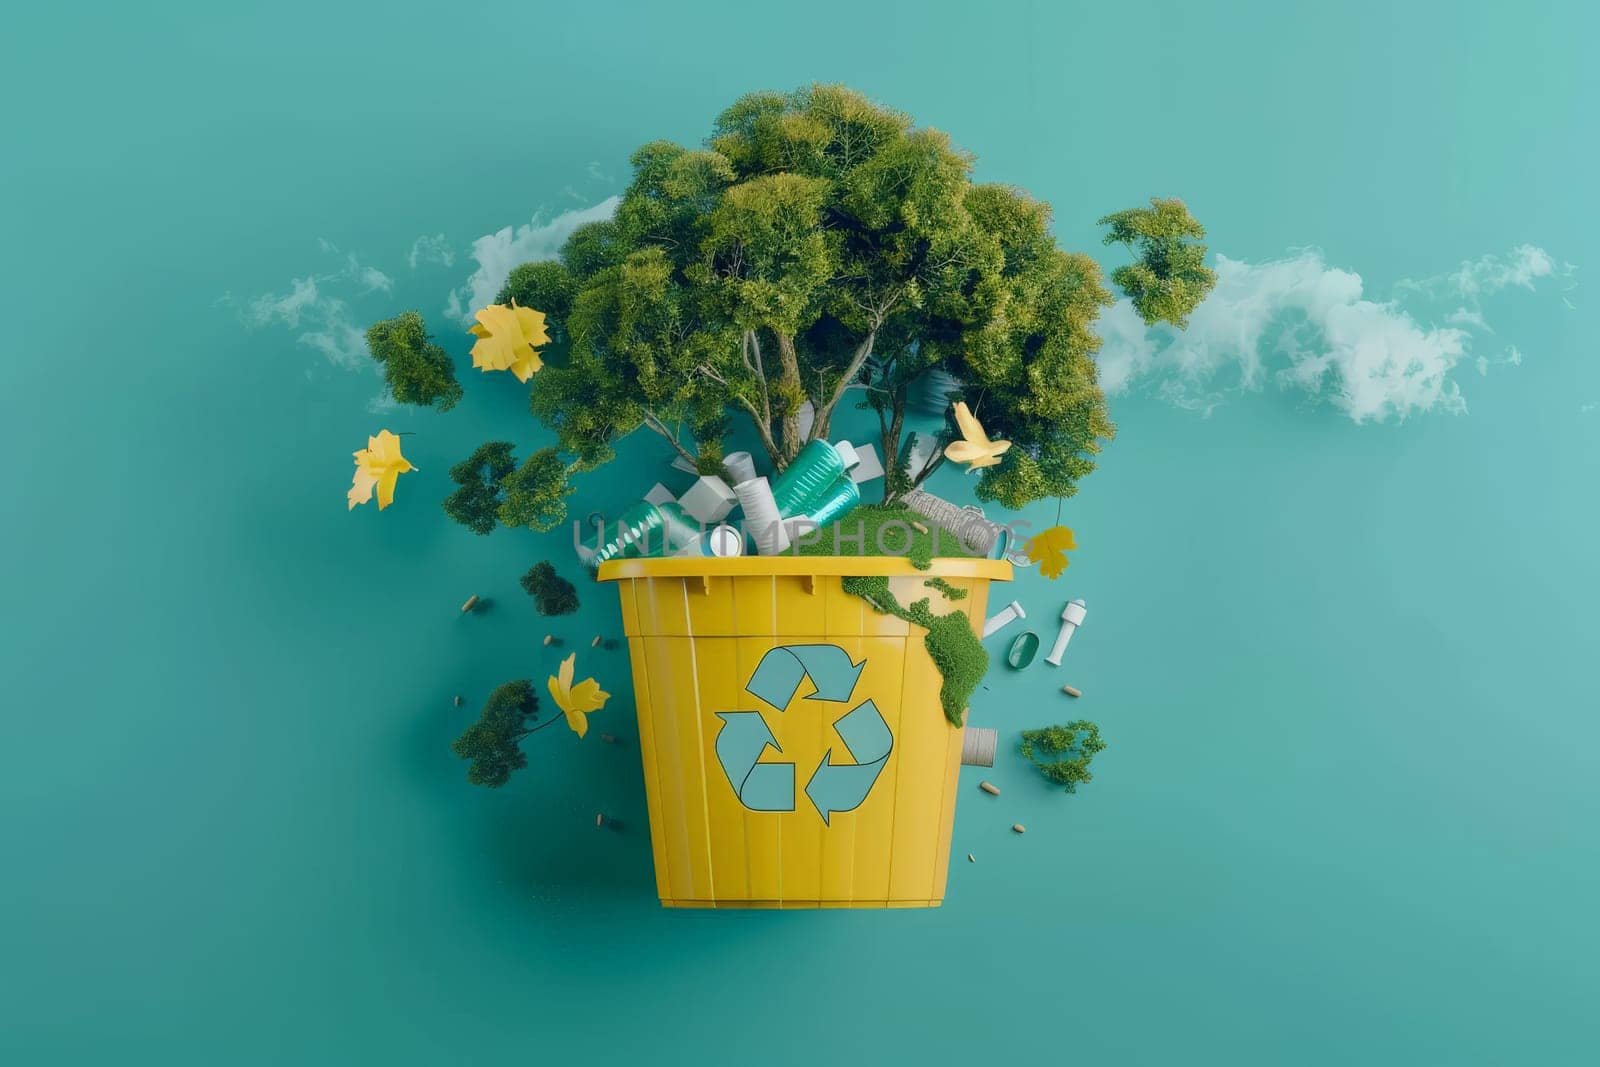 Environmental awareness, recycling, waste management, social media banner.